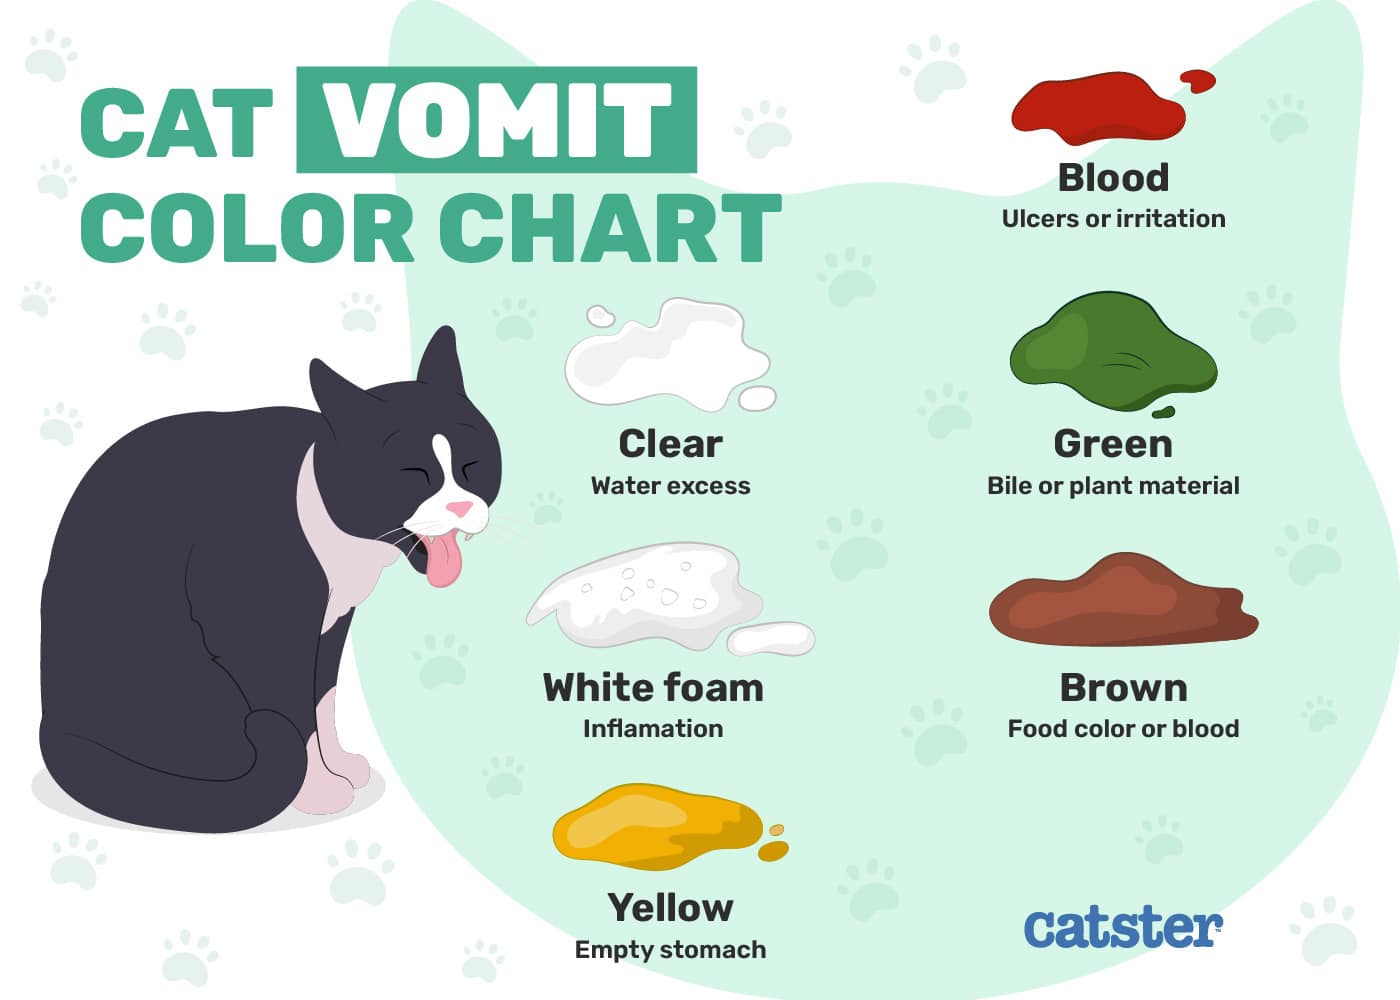 Catster_Cat Vomit Color Chart_2